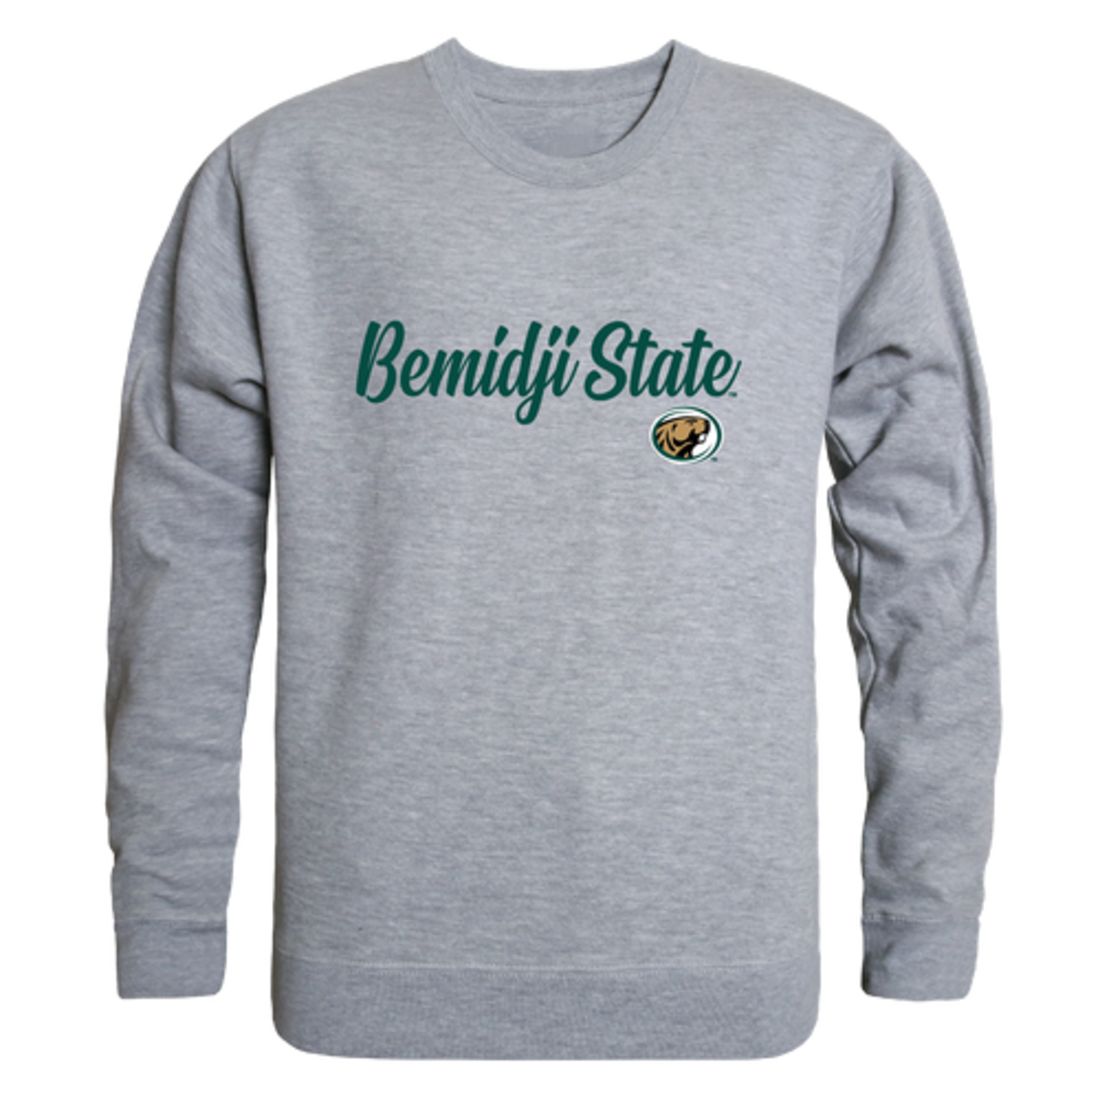 BSU Bemidji State University Beavers Script Crewneck Pullover Sweatshirt Sweater Black-Campus-Wardrobe